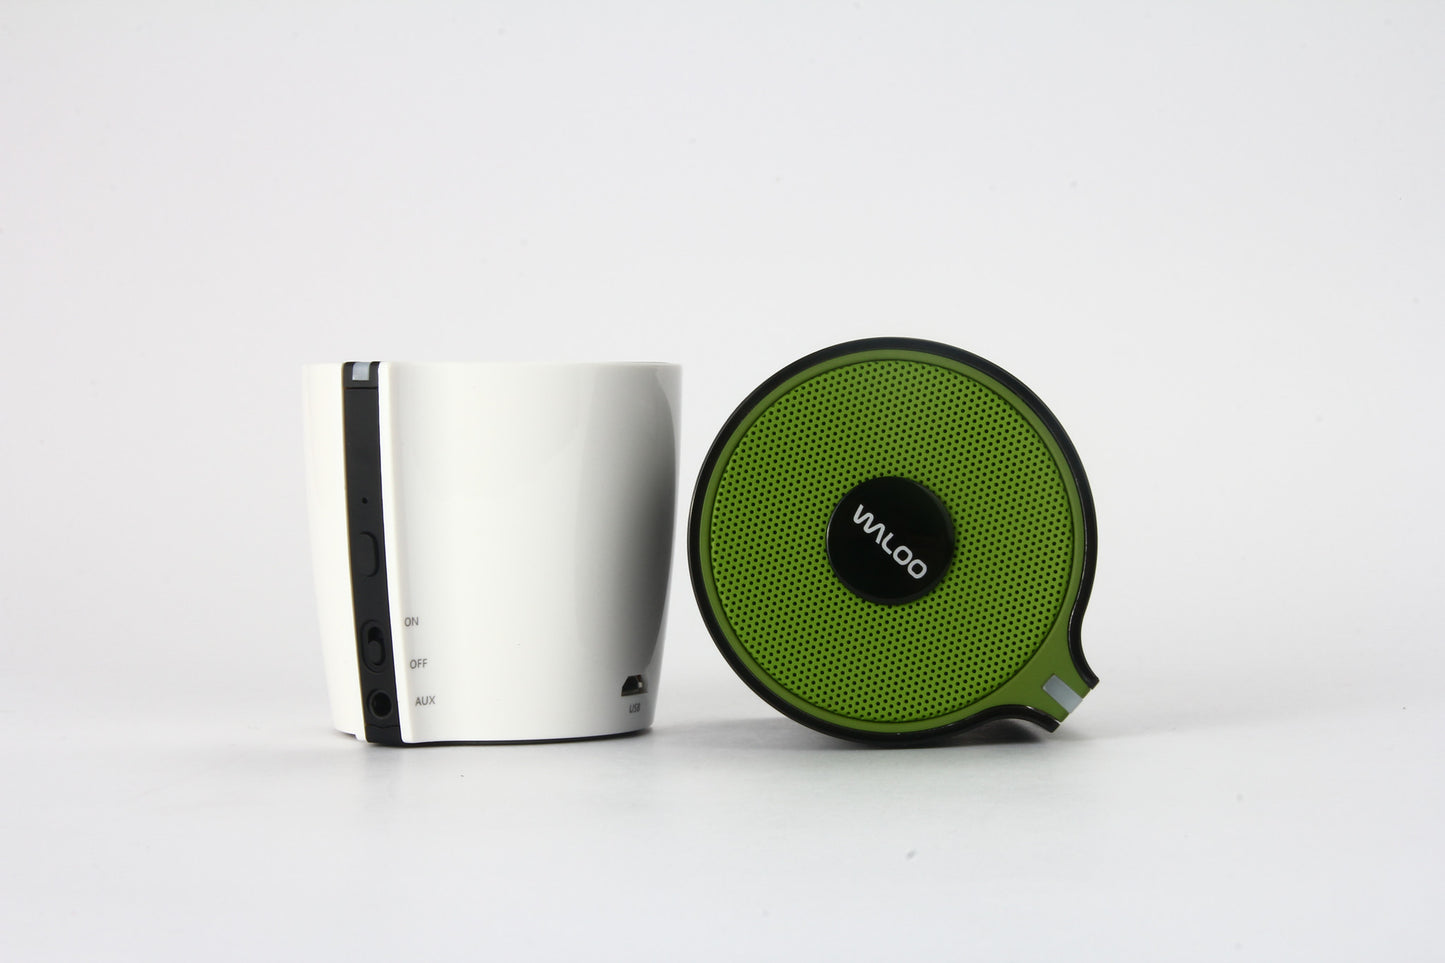 Magic Cup Bluetooth Speaker